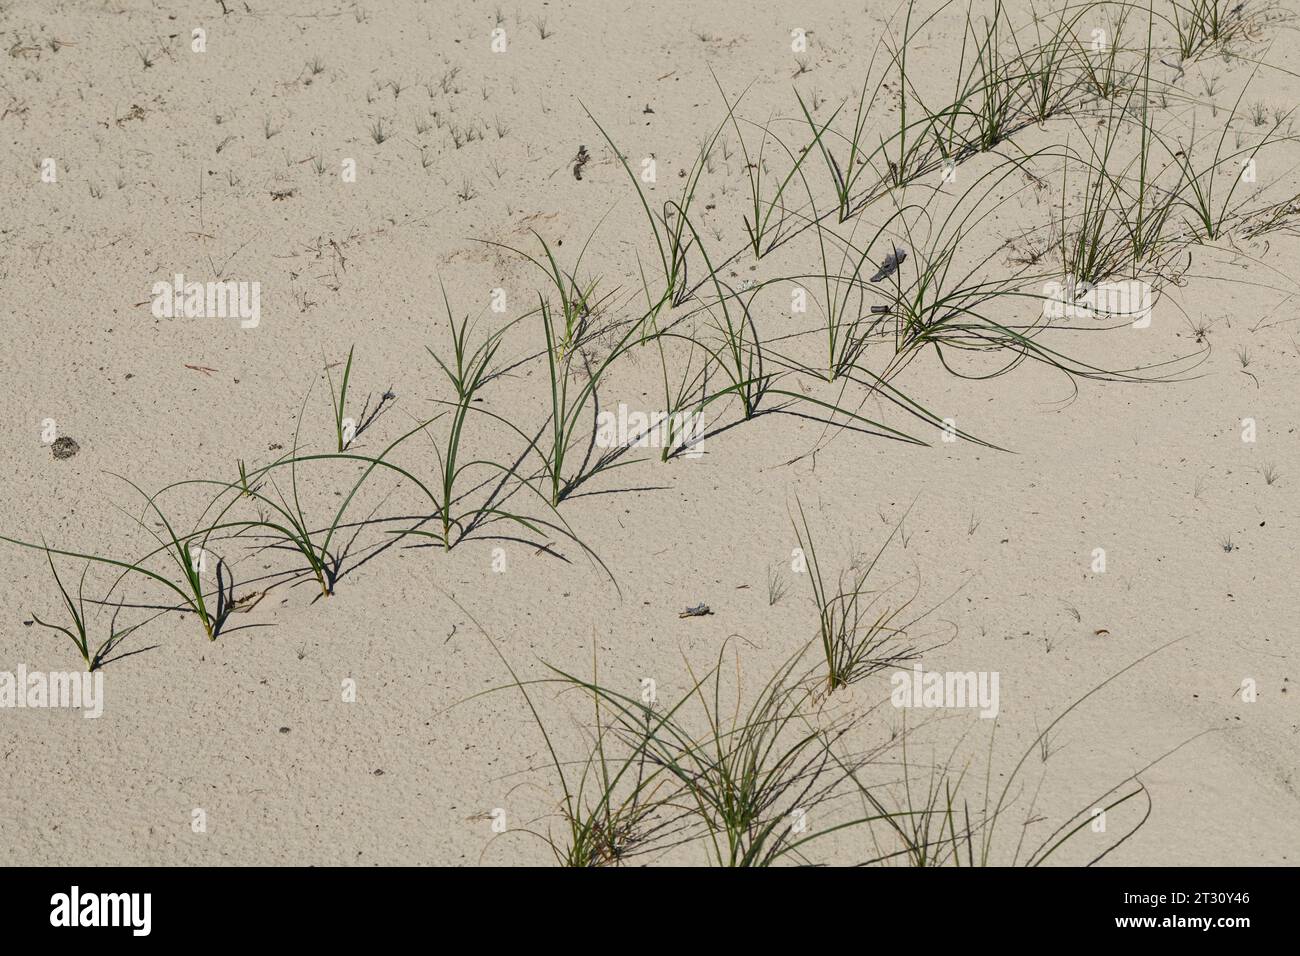 Sand-Segge, Sandsegge, Segge, Carex arenaria, Sand Sedge, La laîche des sables Stock Photo